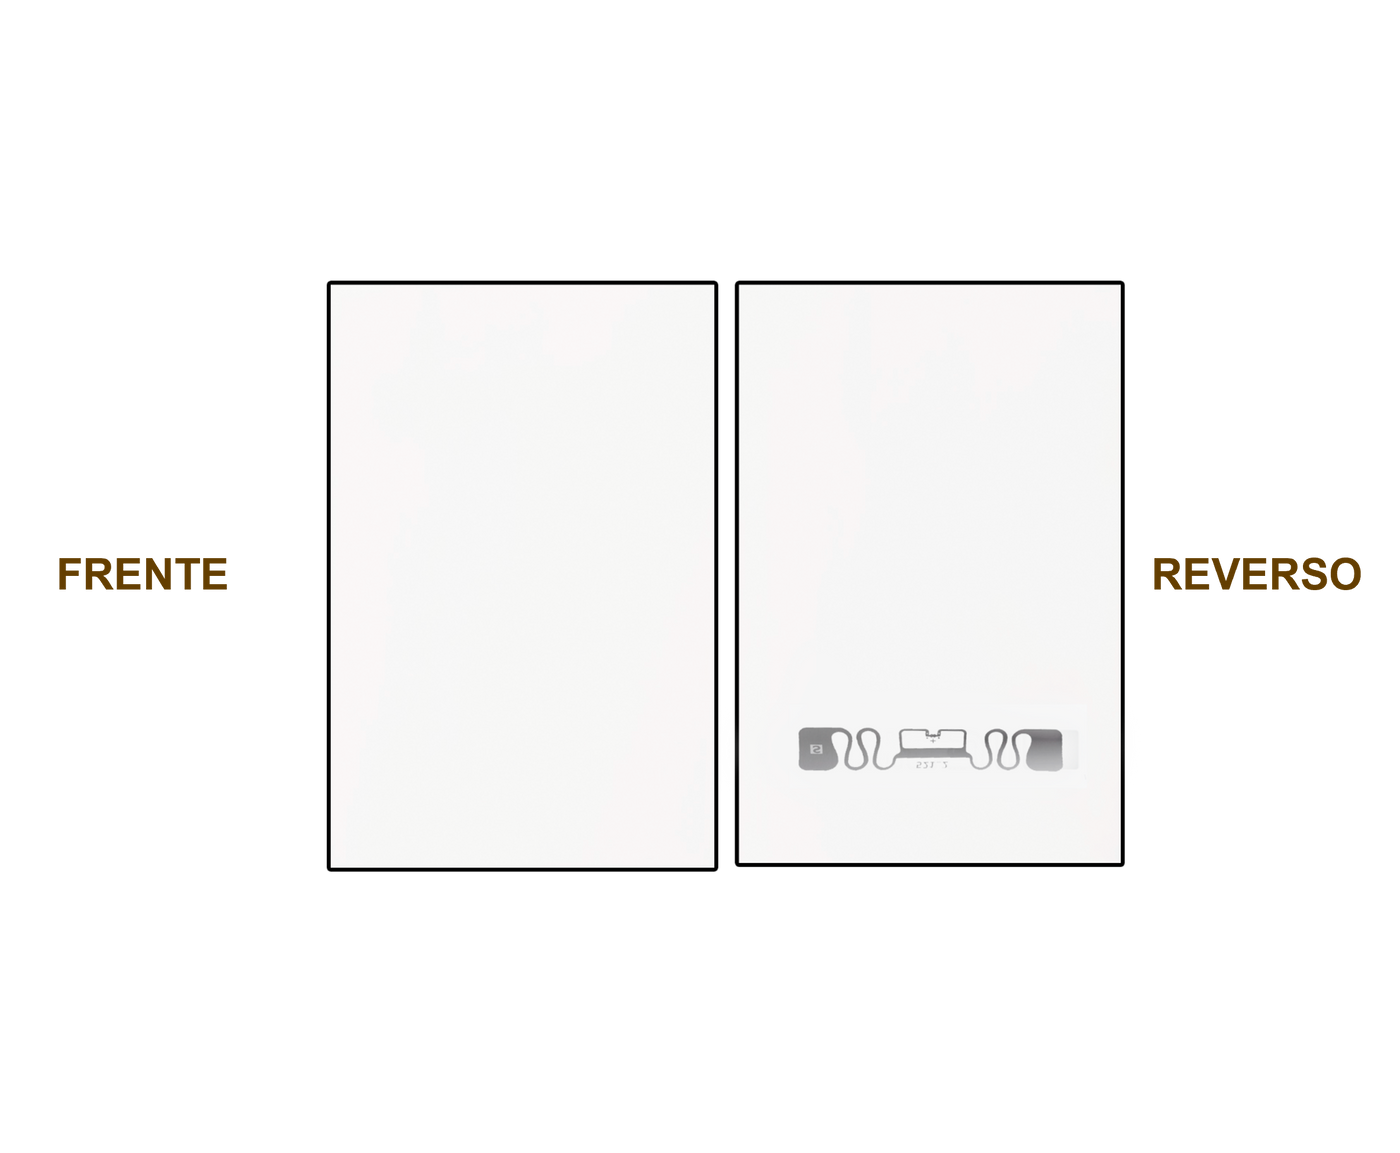 20 Millares de Etiqueta RFID, TTR Adherible blanca 101mm x 152 mm con inlay EPC Miniweb M730 de Avery Dennison, class 1, Gen 2, UHF 860-960 MHz, 128 Bit